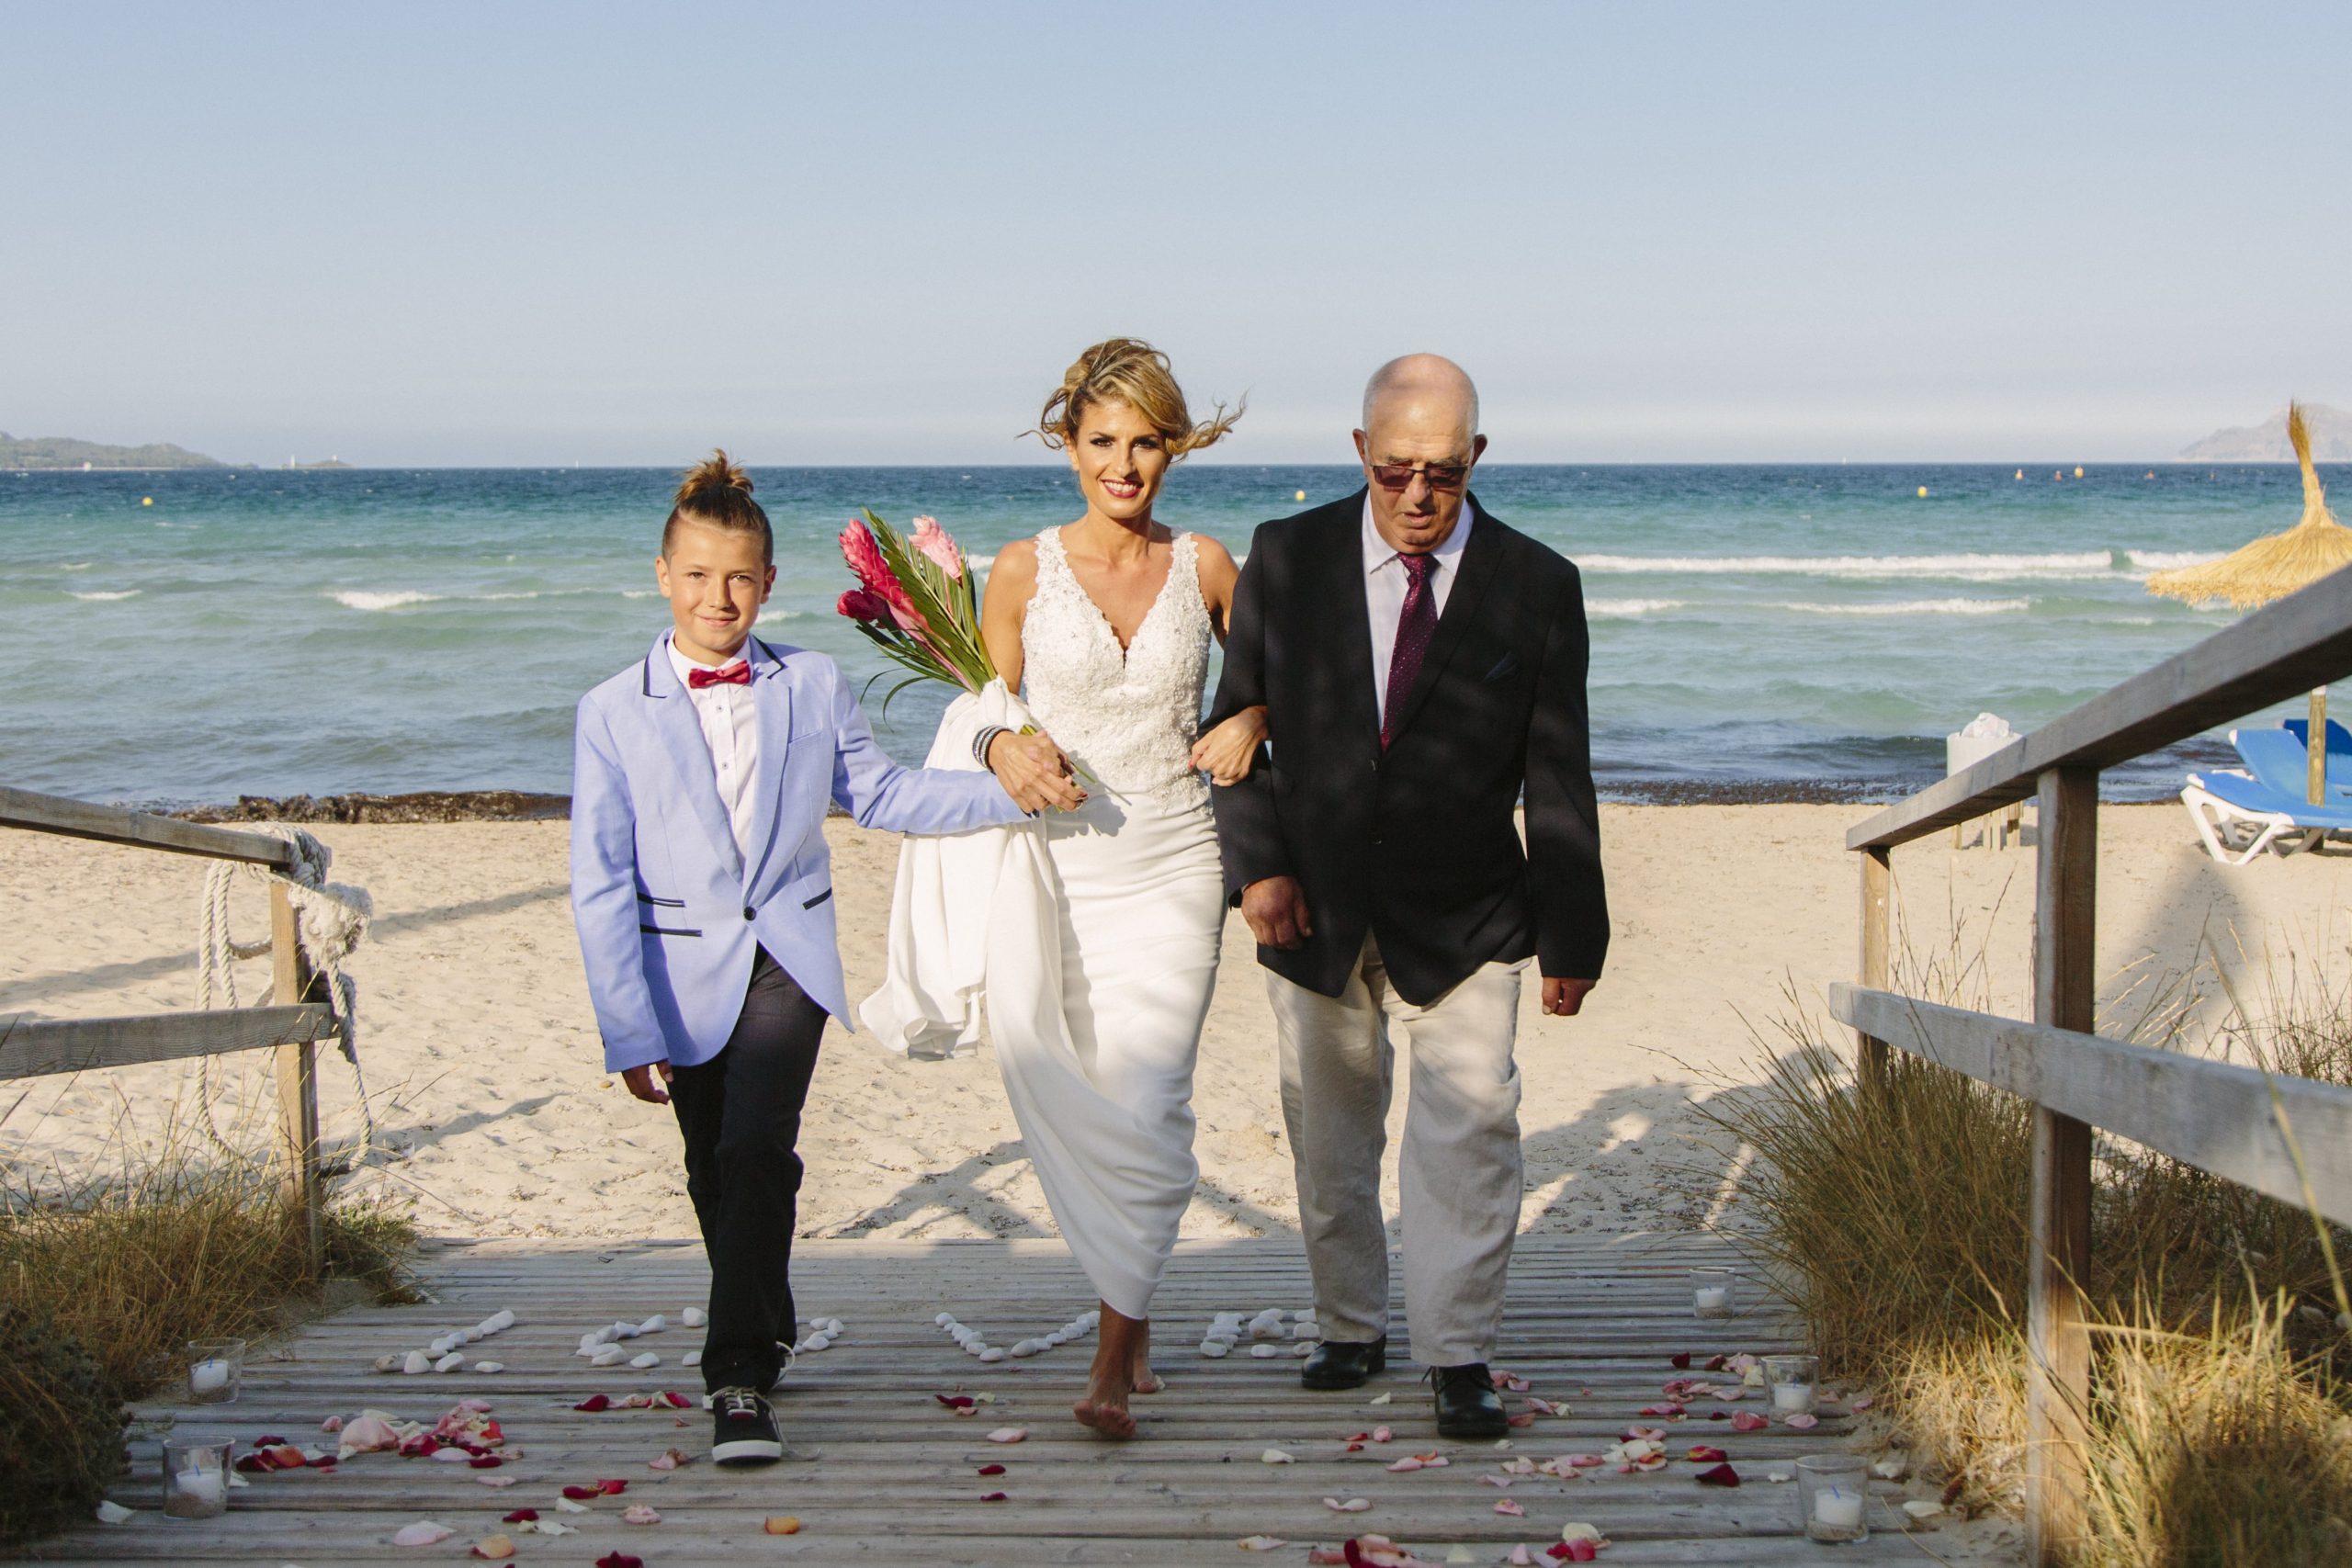 Wedding at the beach in Majorca